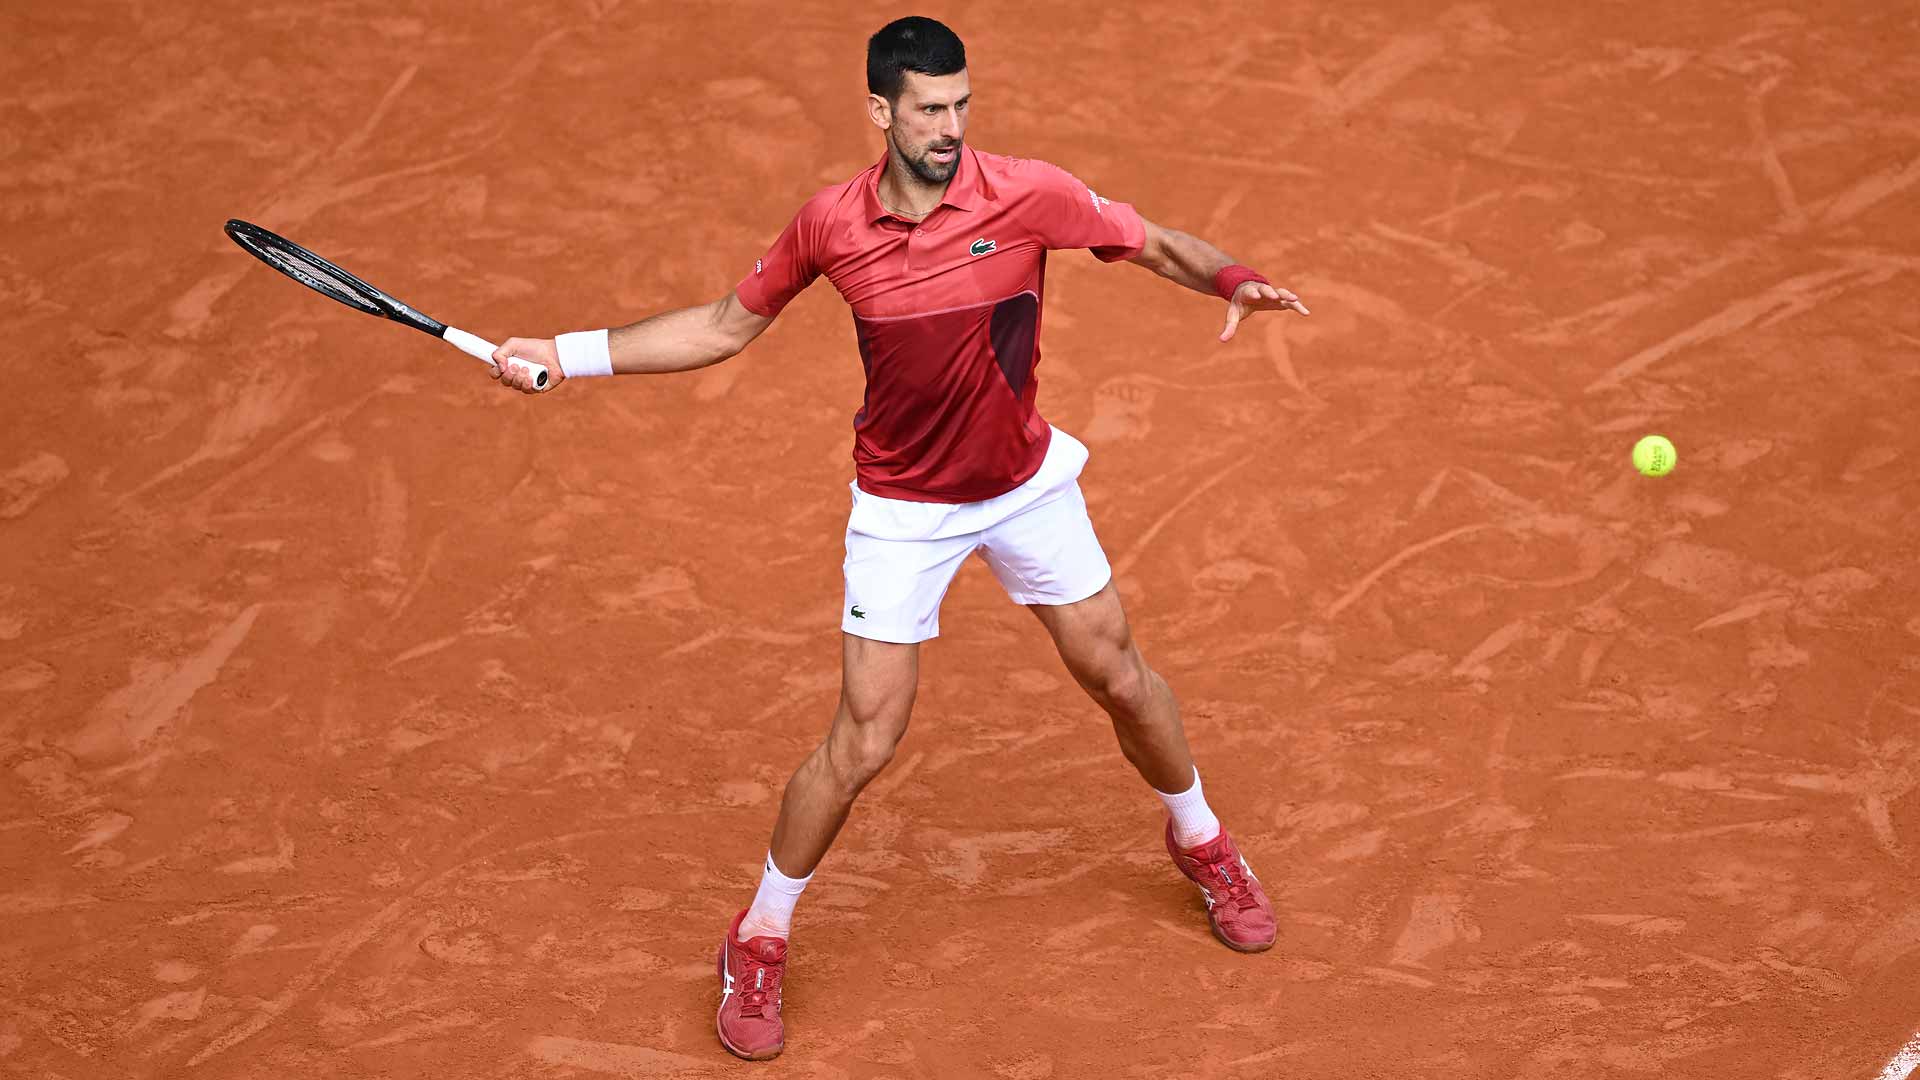 Novak Djokovic edges Francisco Cerundolo on Monday for his second consecutive five-set win at Roland Garros.